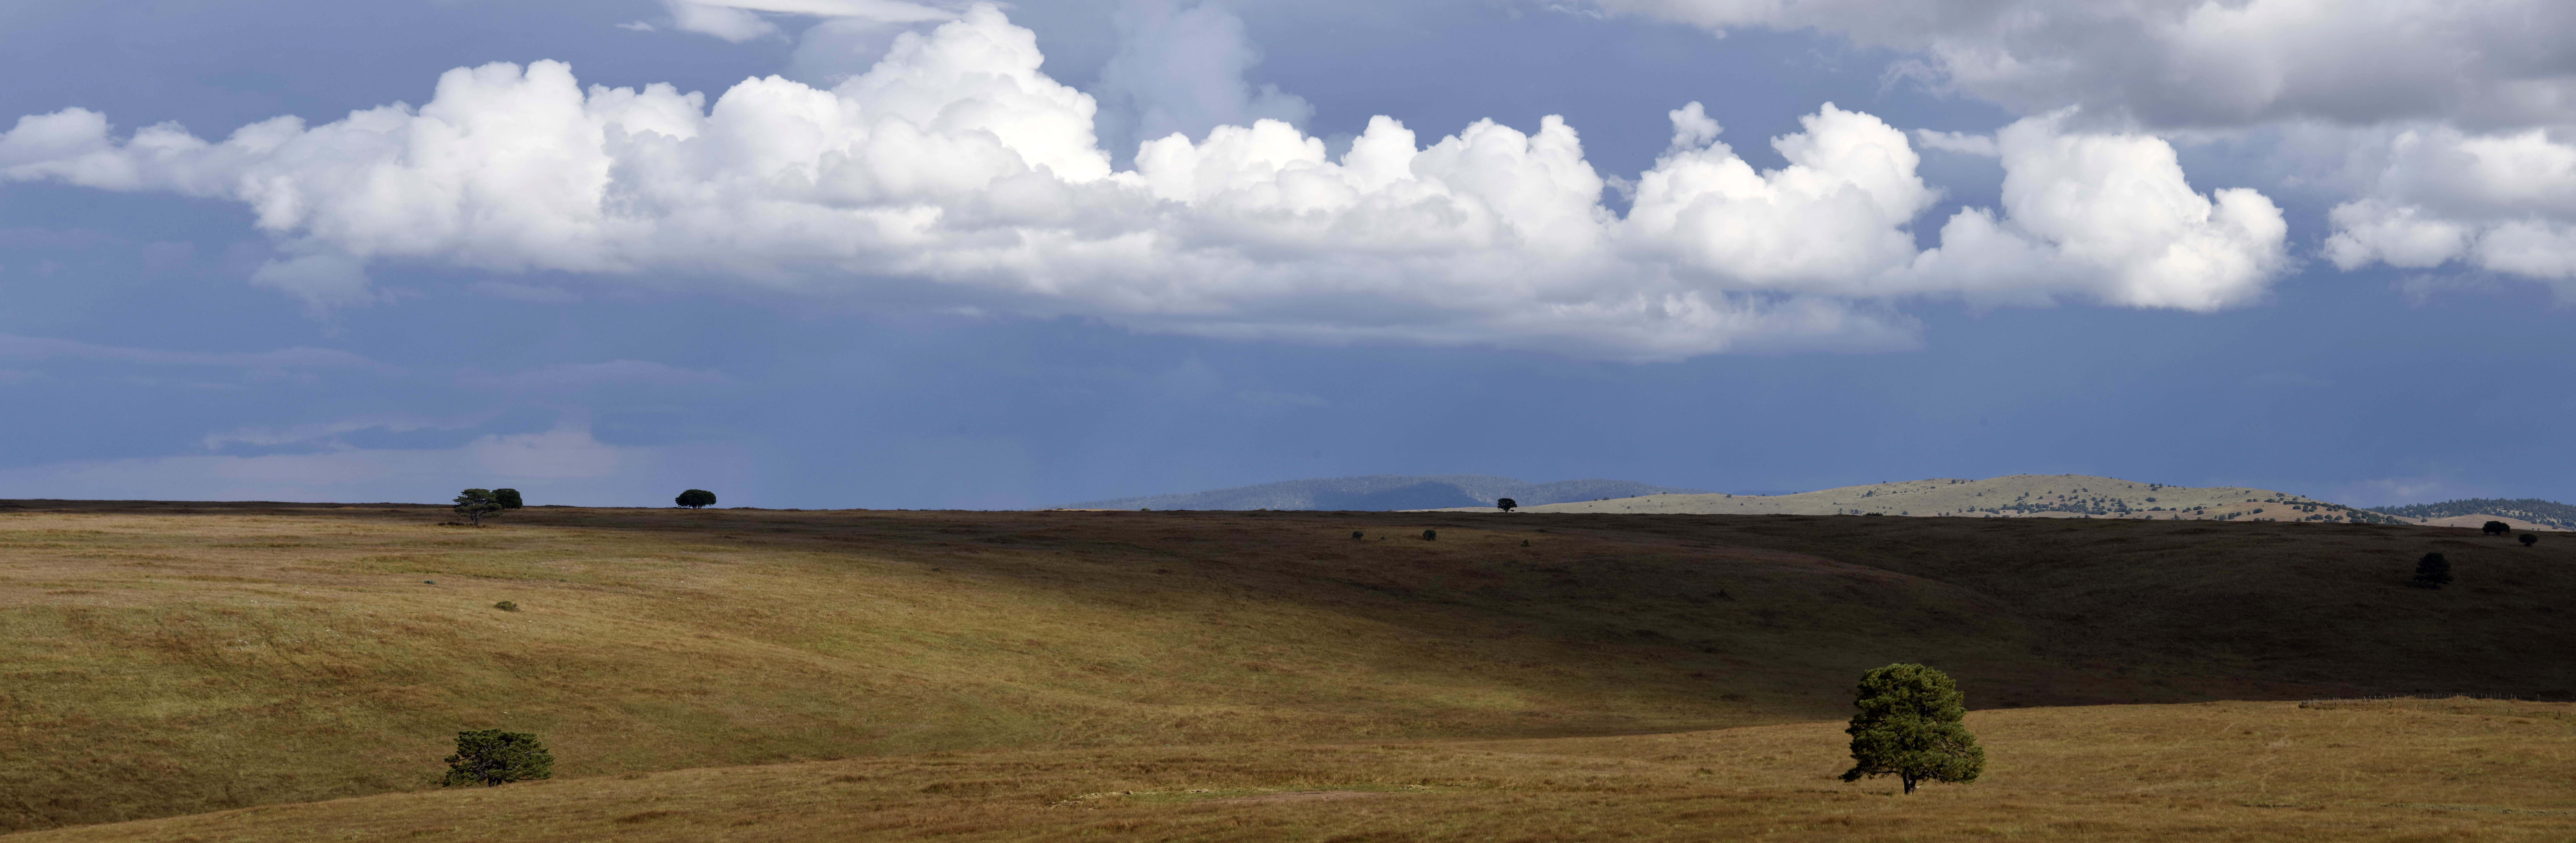 Gila Grasslands panoramic